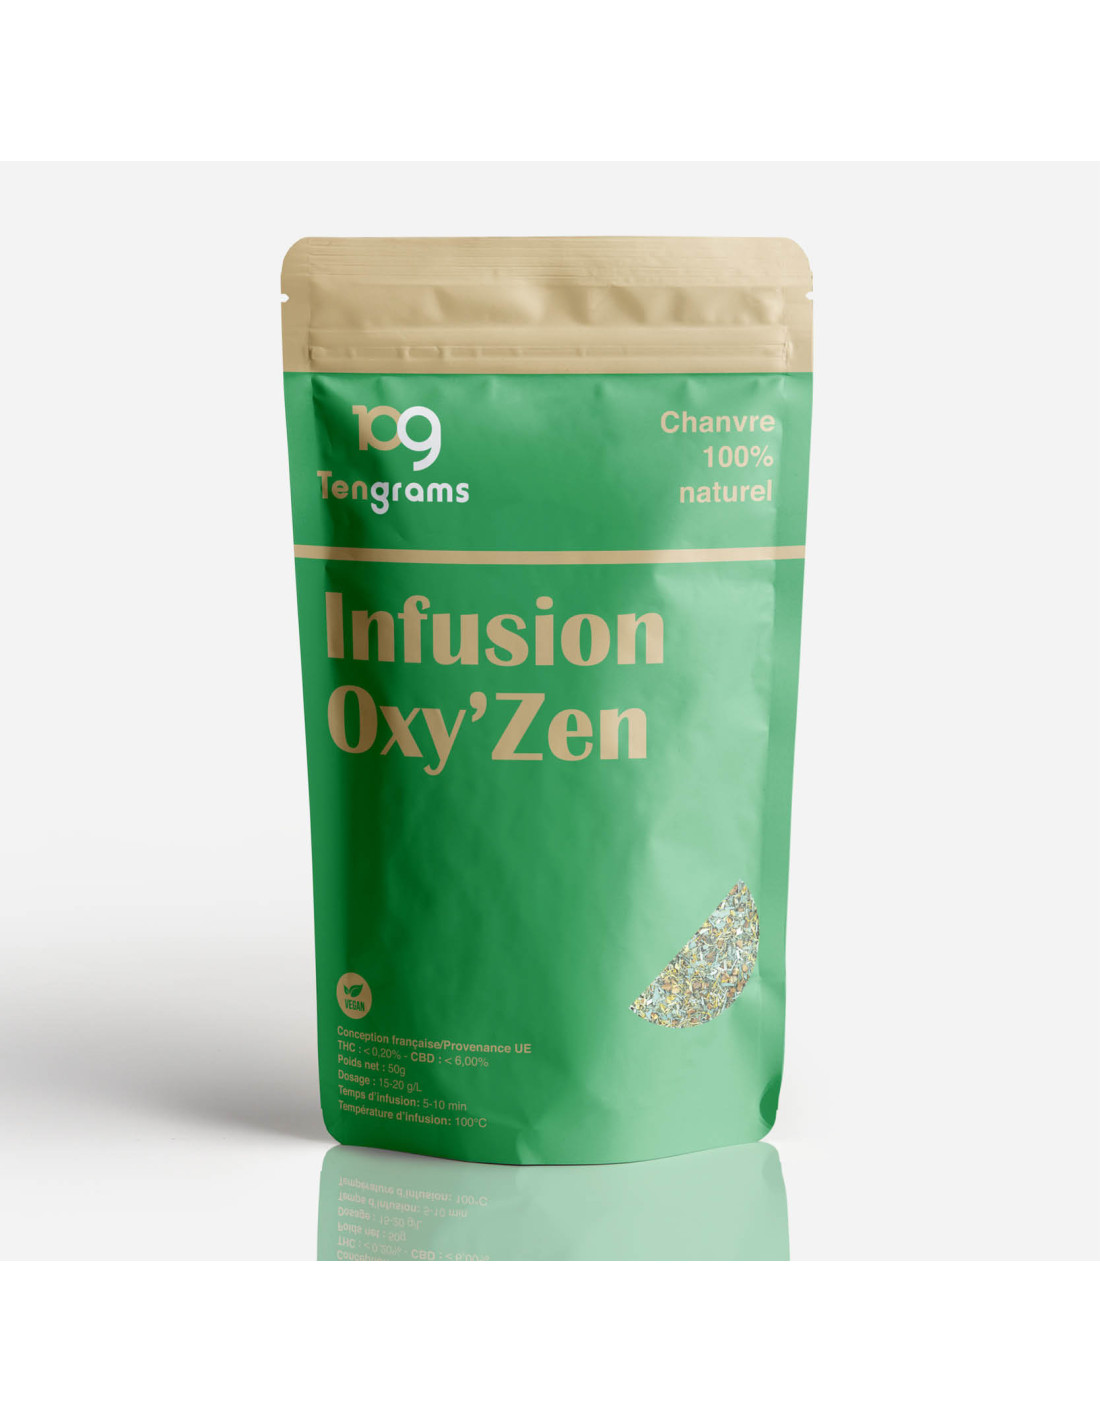 the-infusion-oxyzen-tengrams